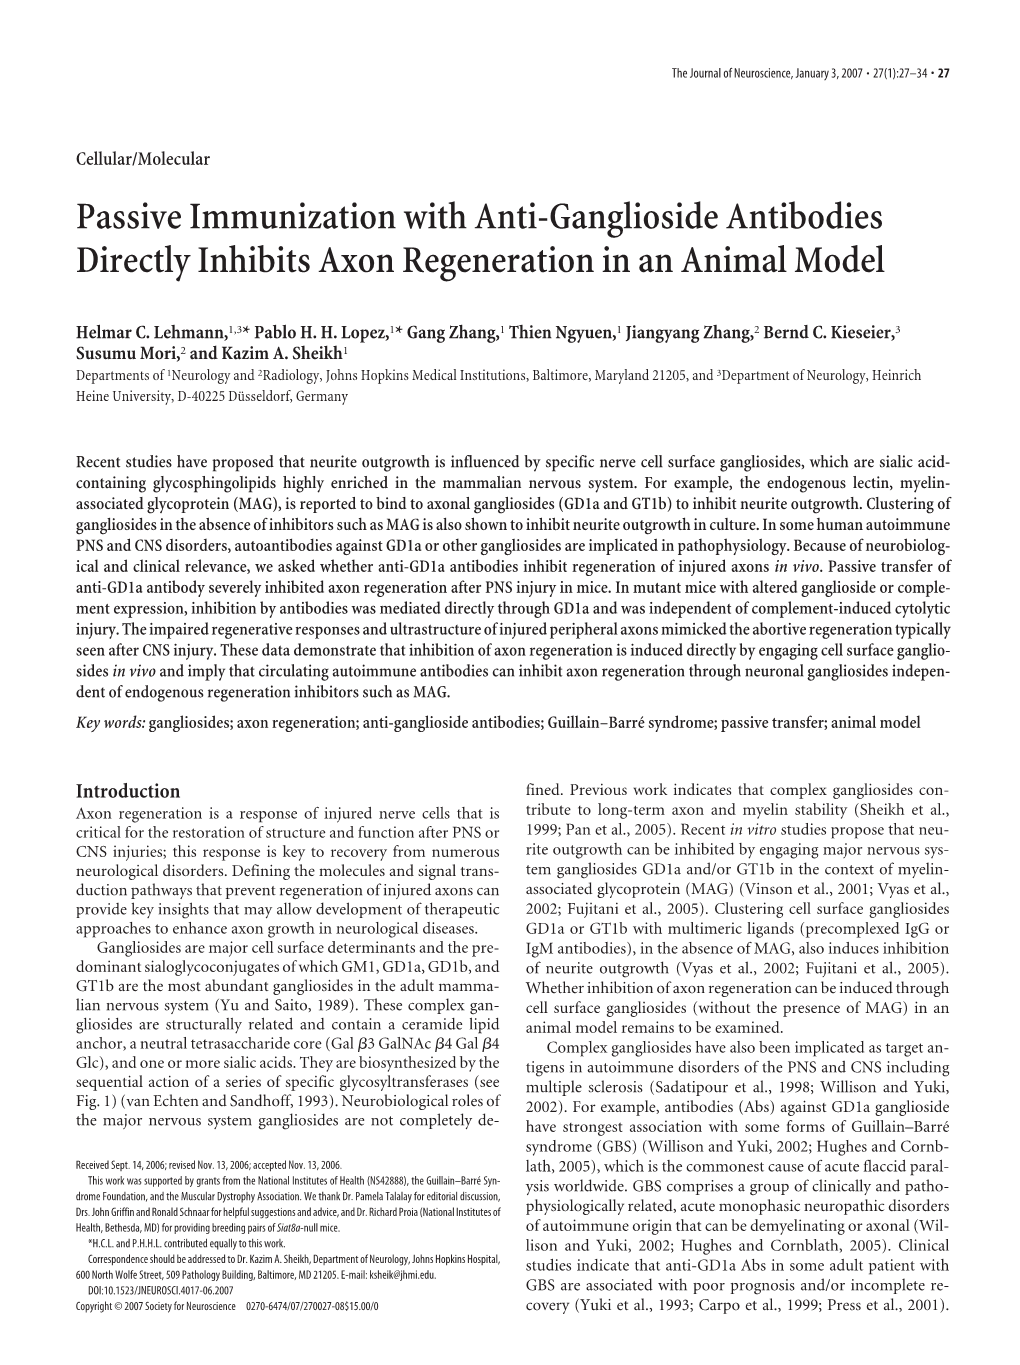 Passive Immunization with Anti-Ganglioside Antibodies Directly Inhibits Axon Regeneration in an Animal Model